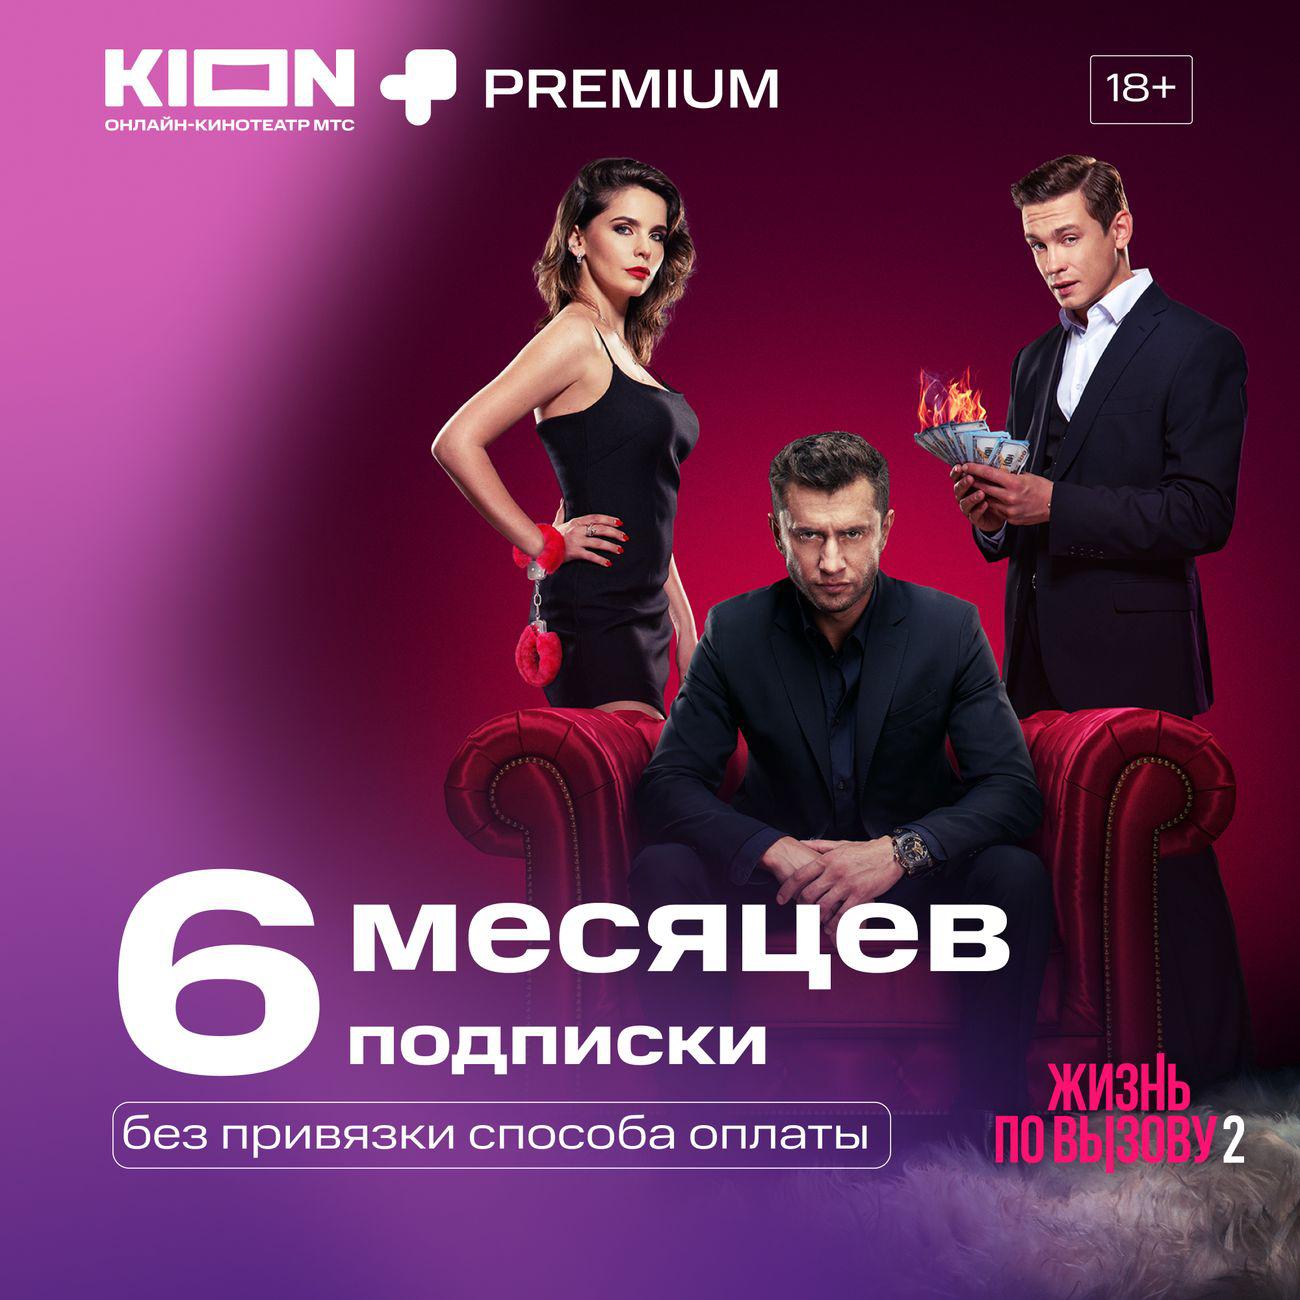 Подписка Kion+premium на 6 месяцев, Яндекс плюс кончился